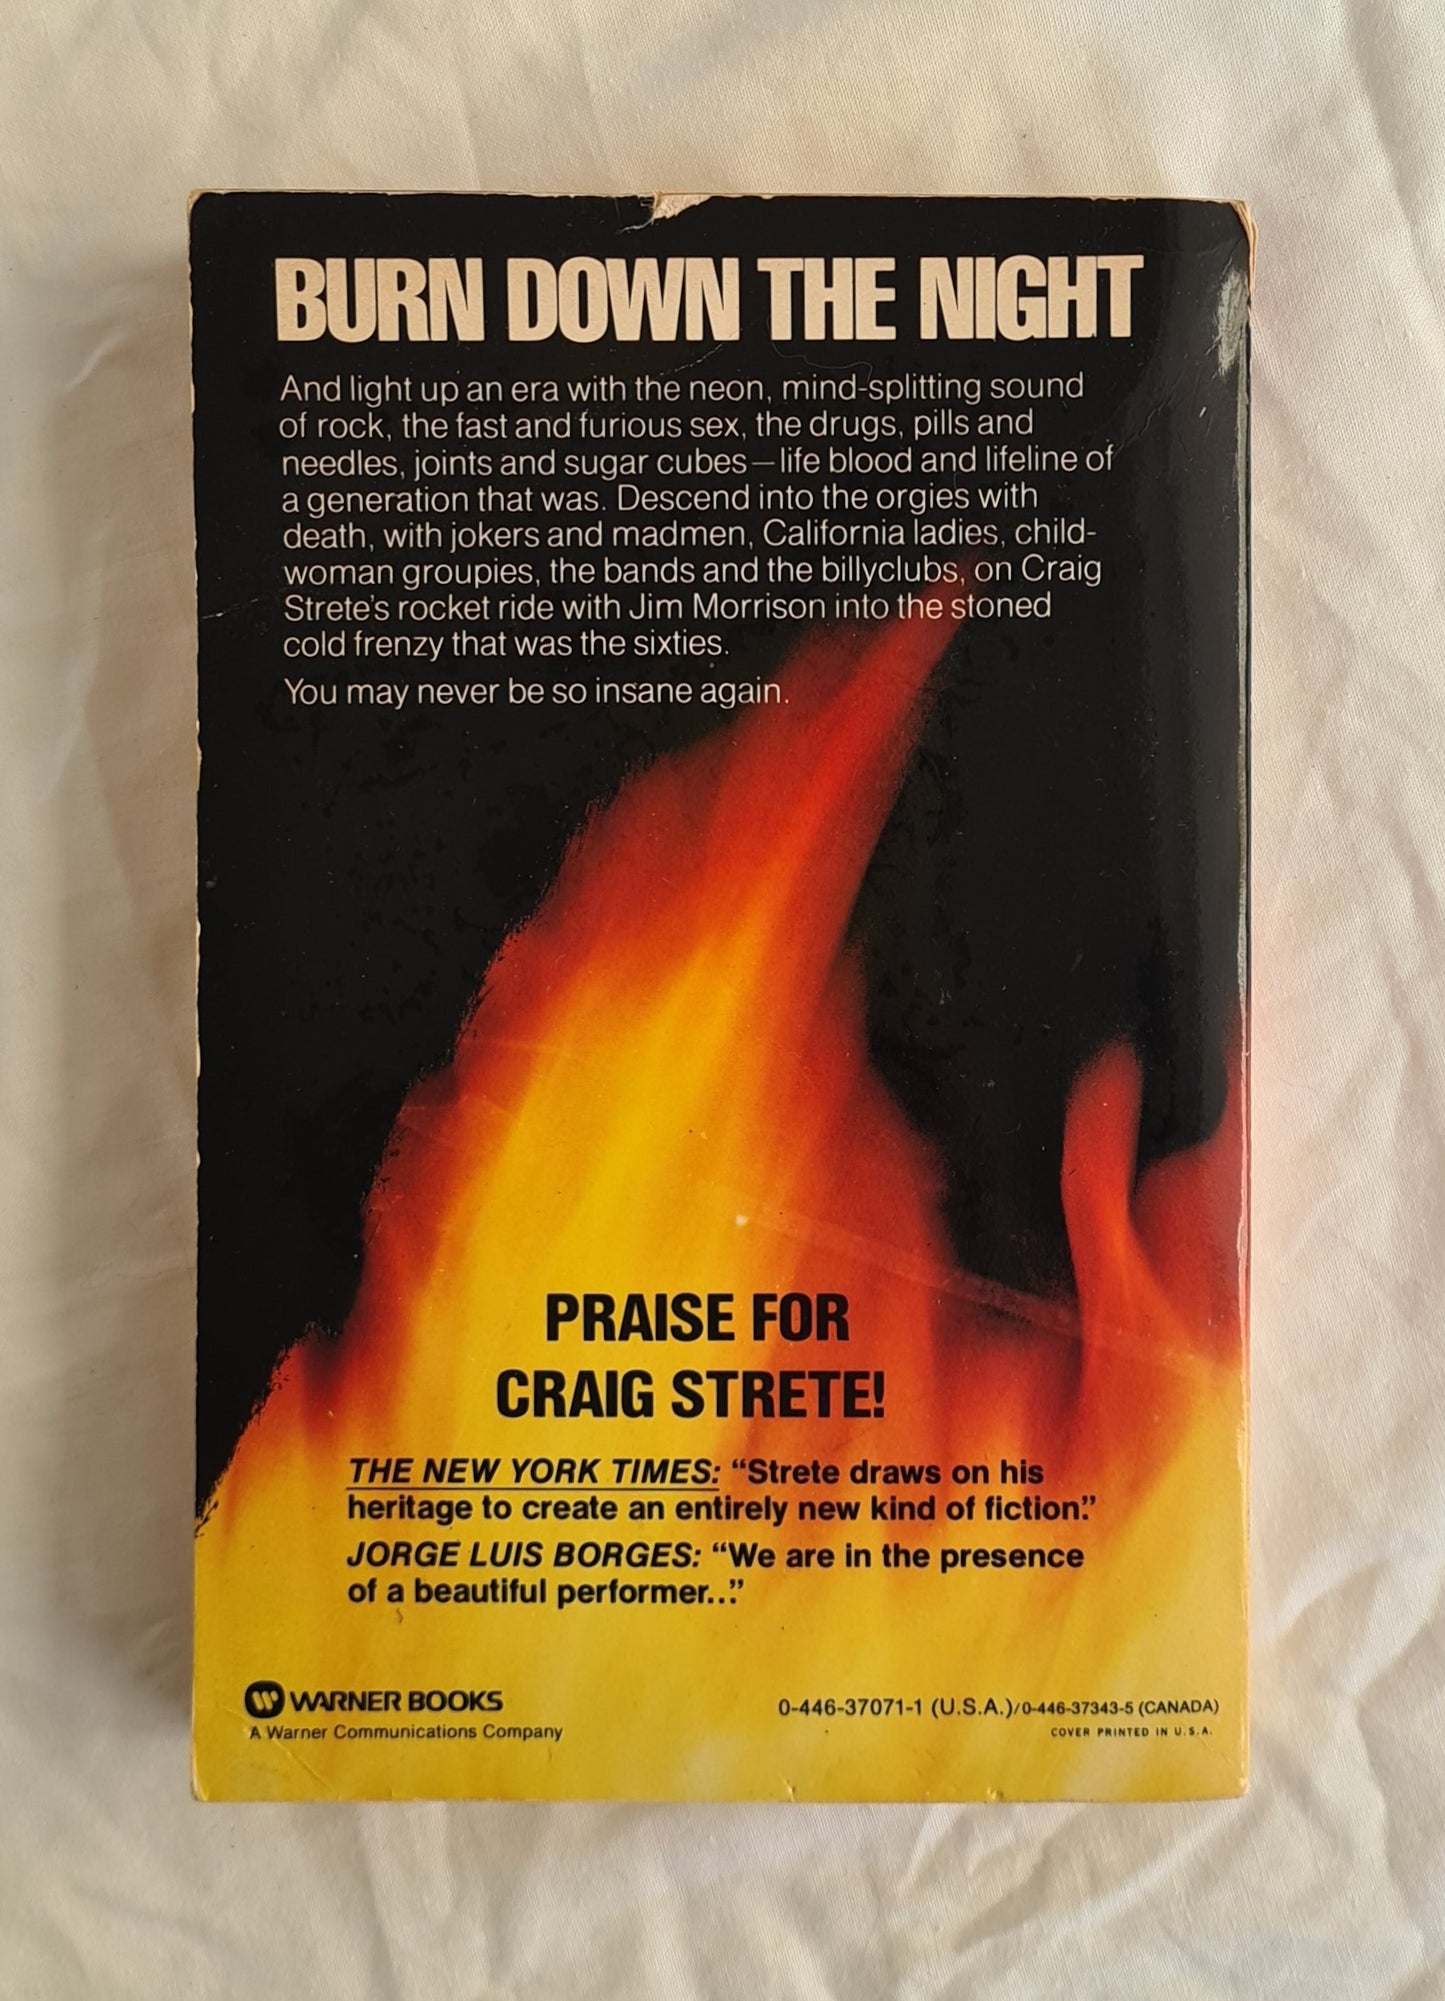 Burn Down the Night by Craig Kee Strete